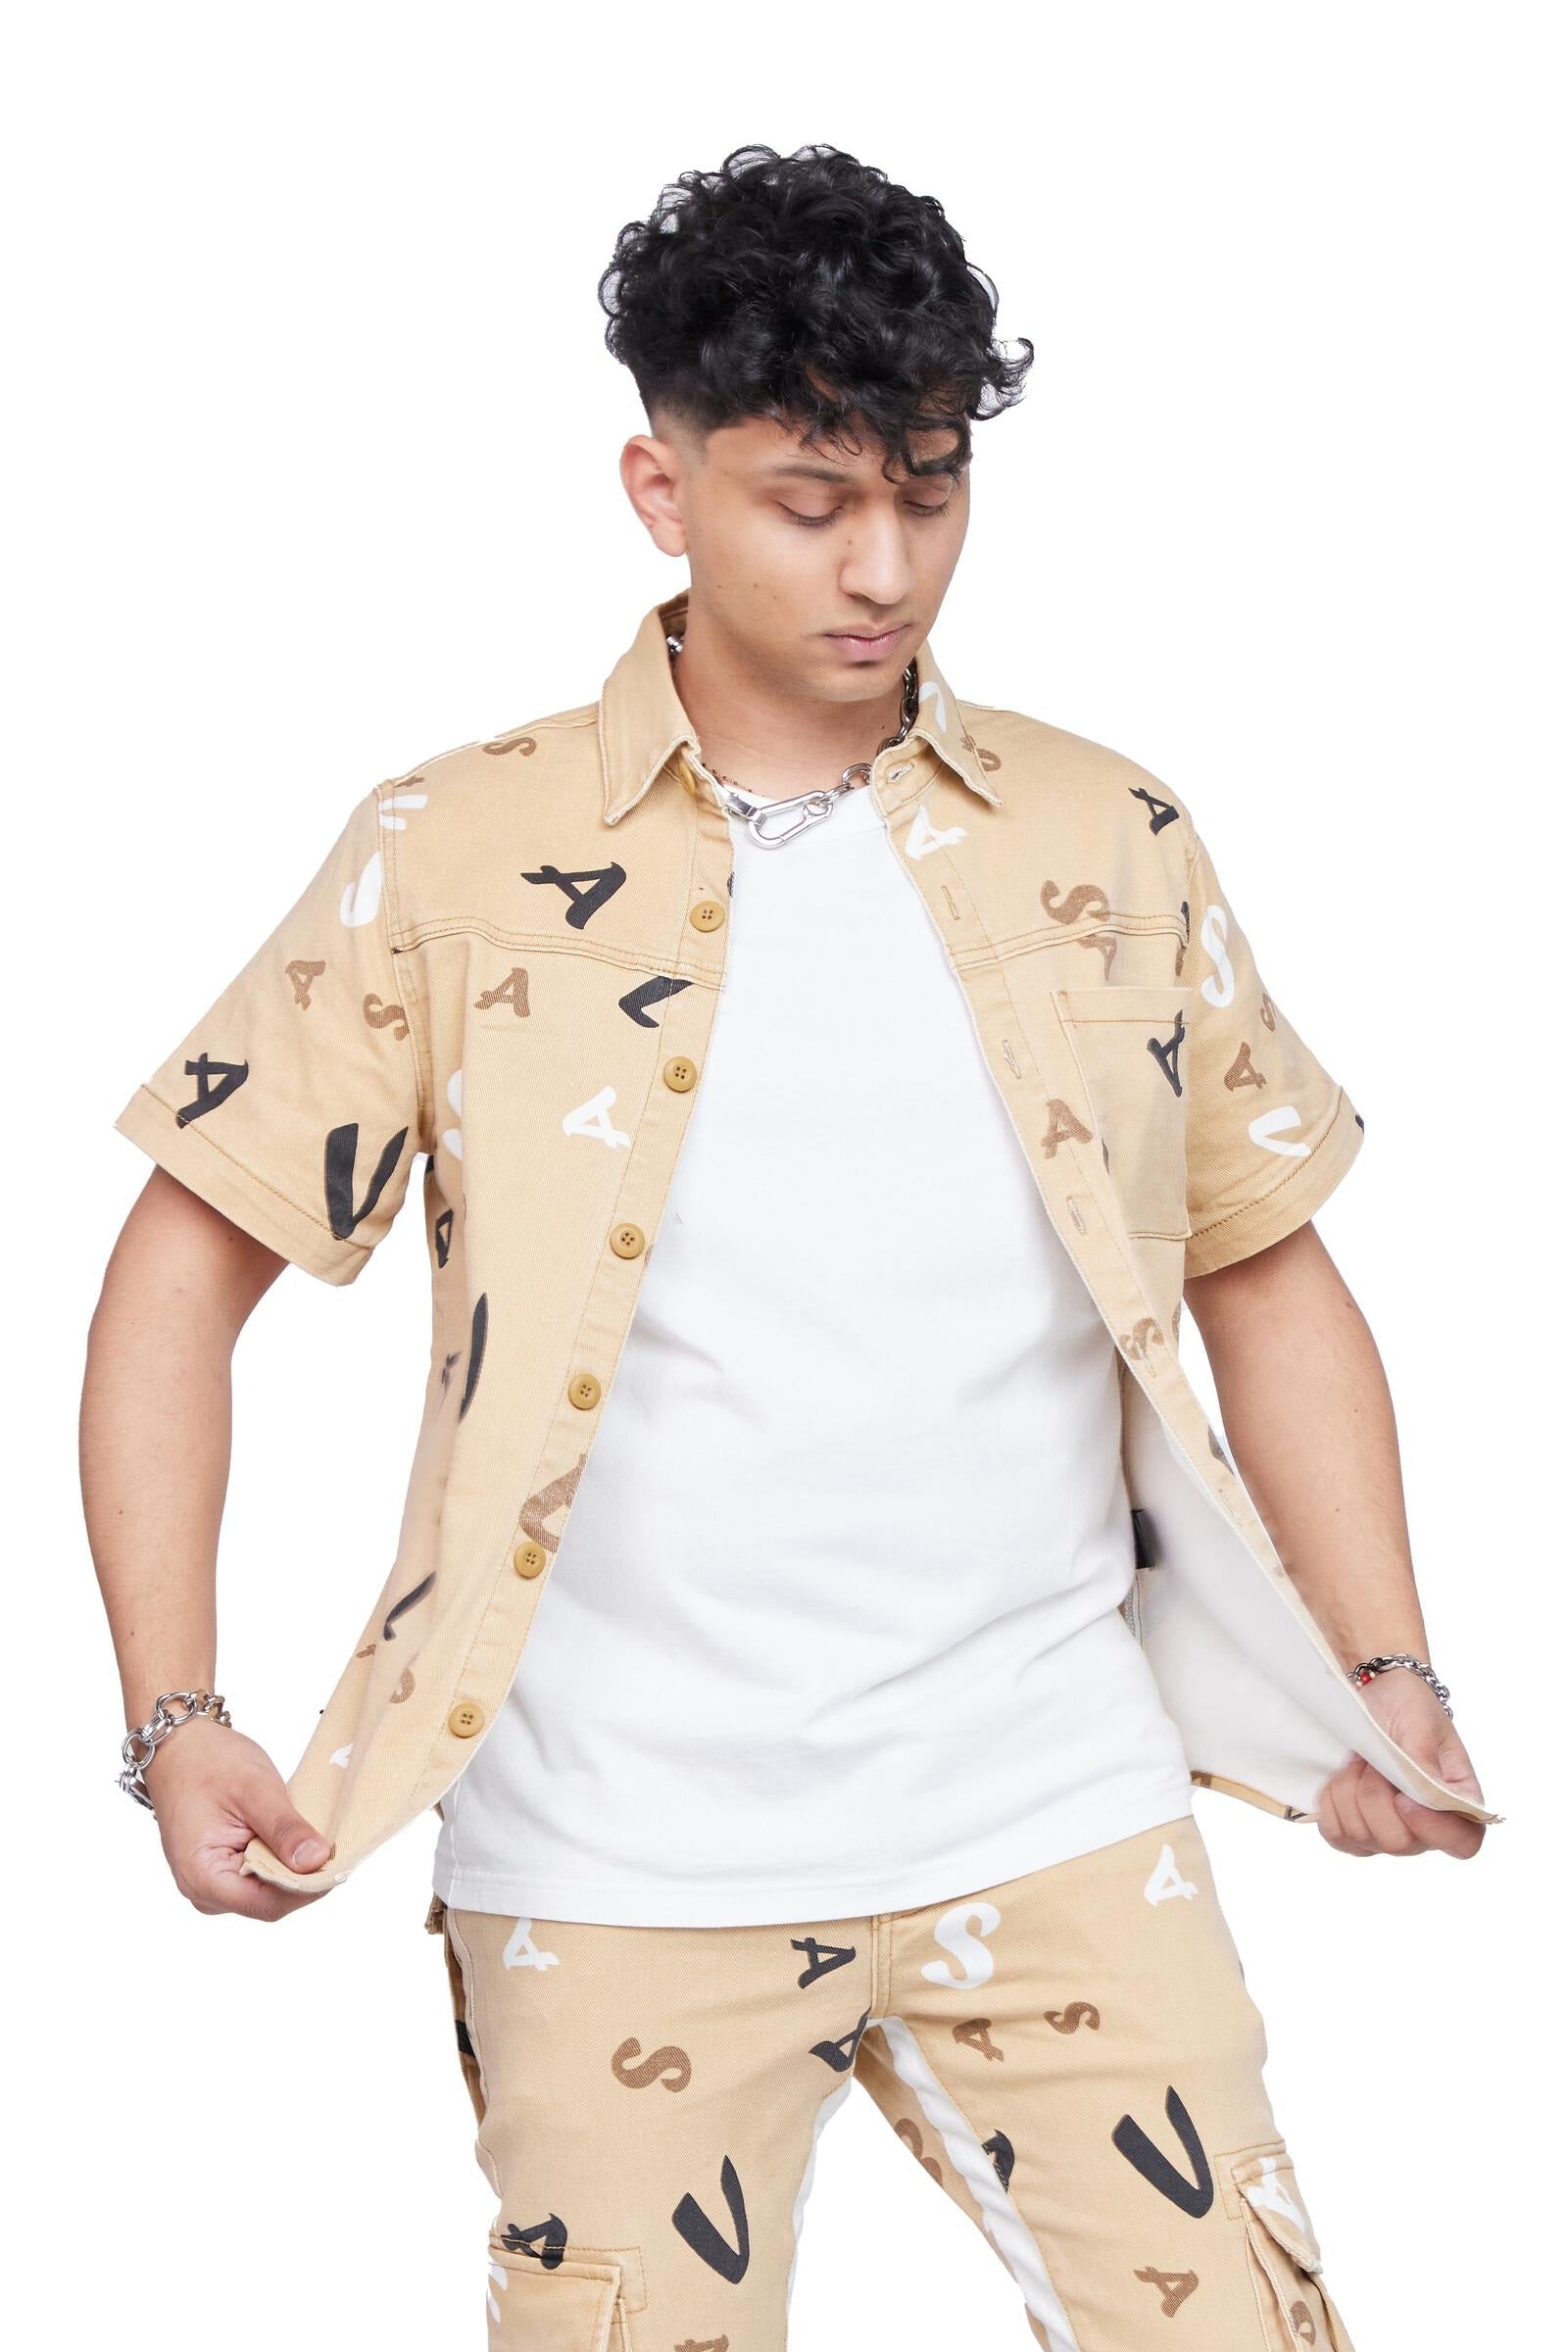 Valabasas Button Up Shirt - Puzzle Woven